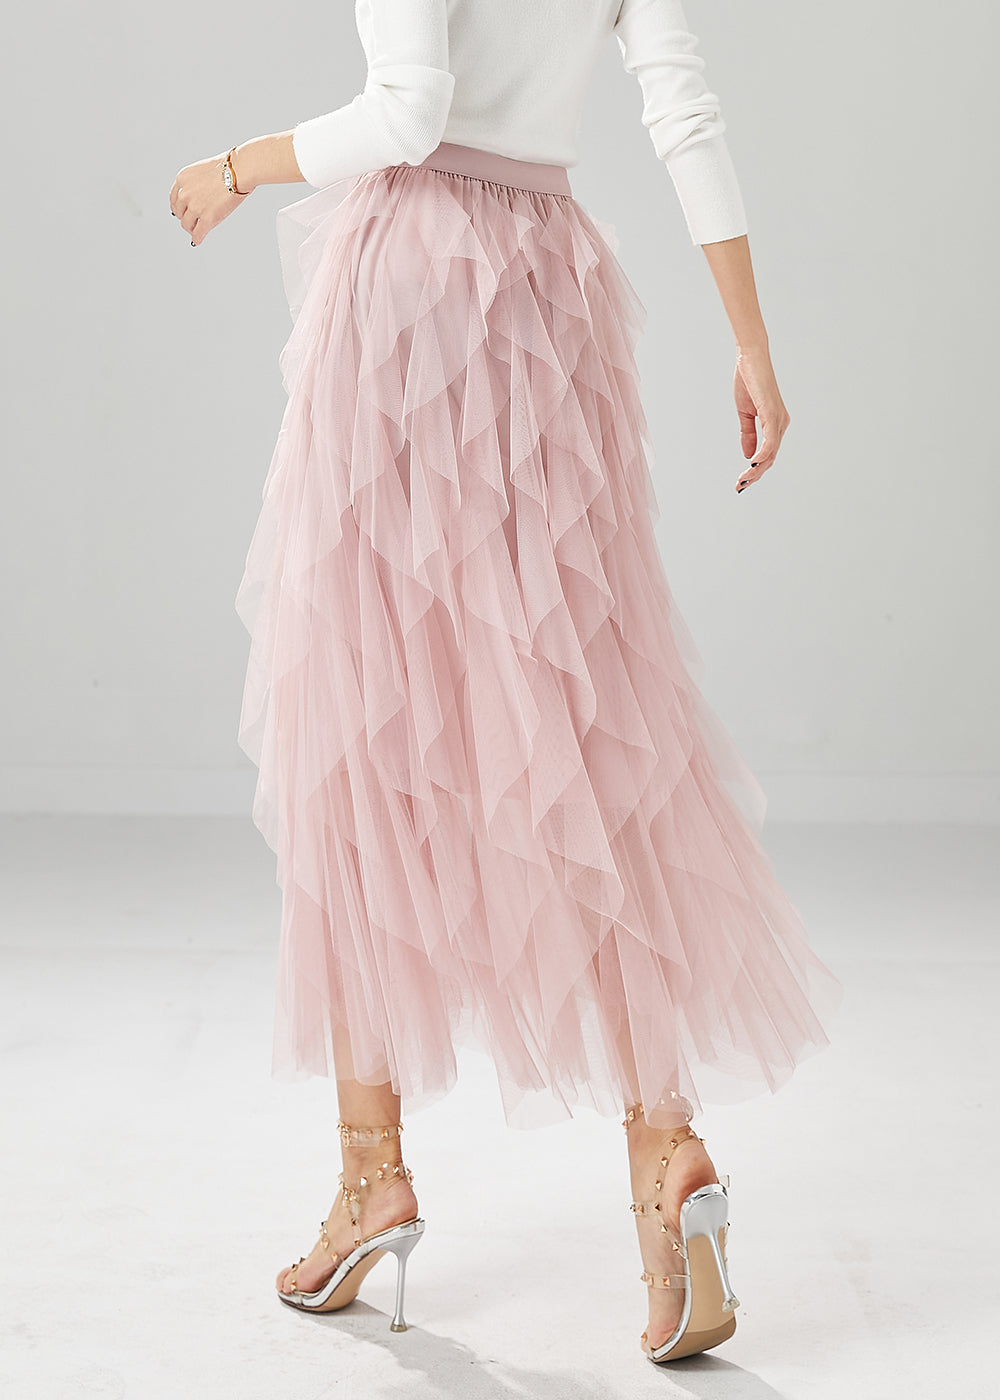 Elegant Pink High Waist Ruffles Tulle Skirt Summer